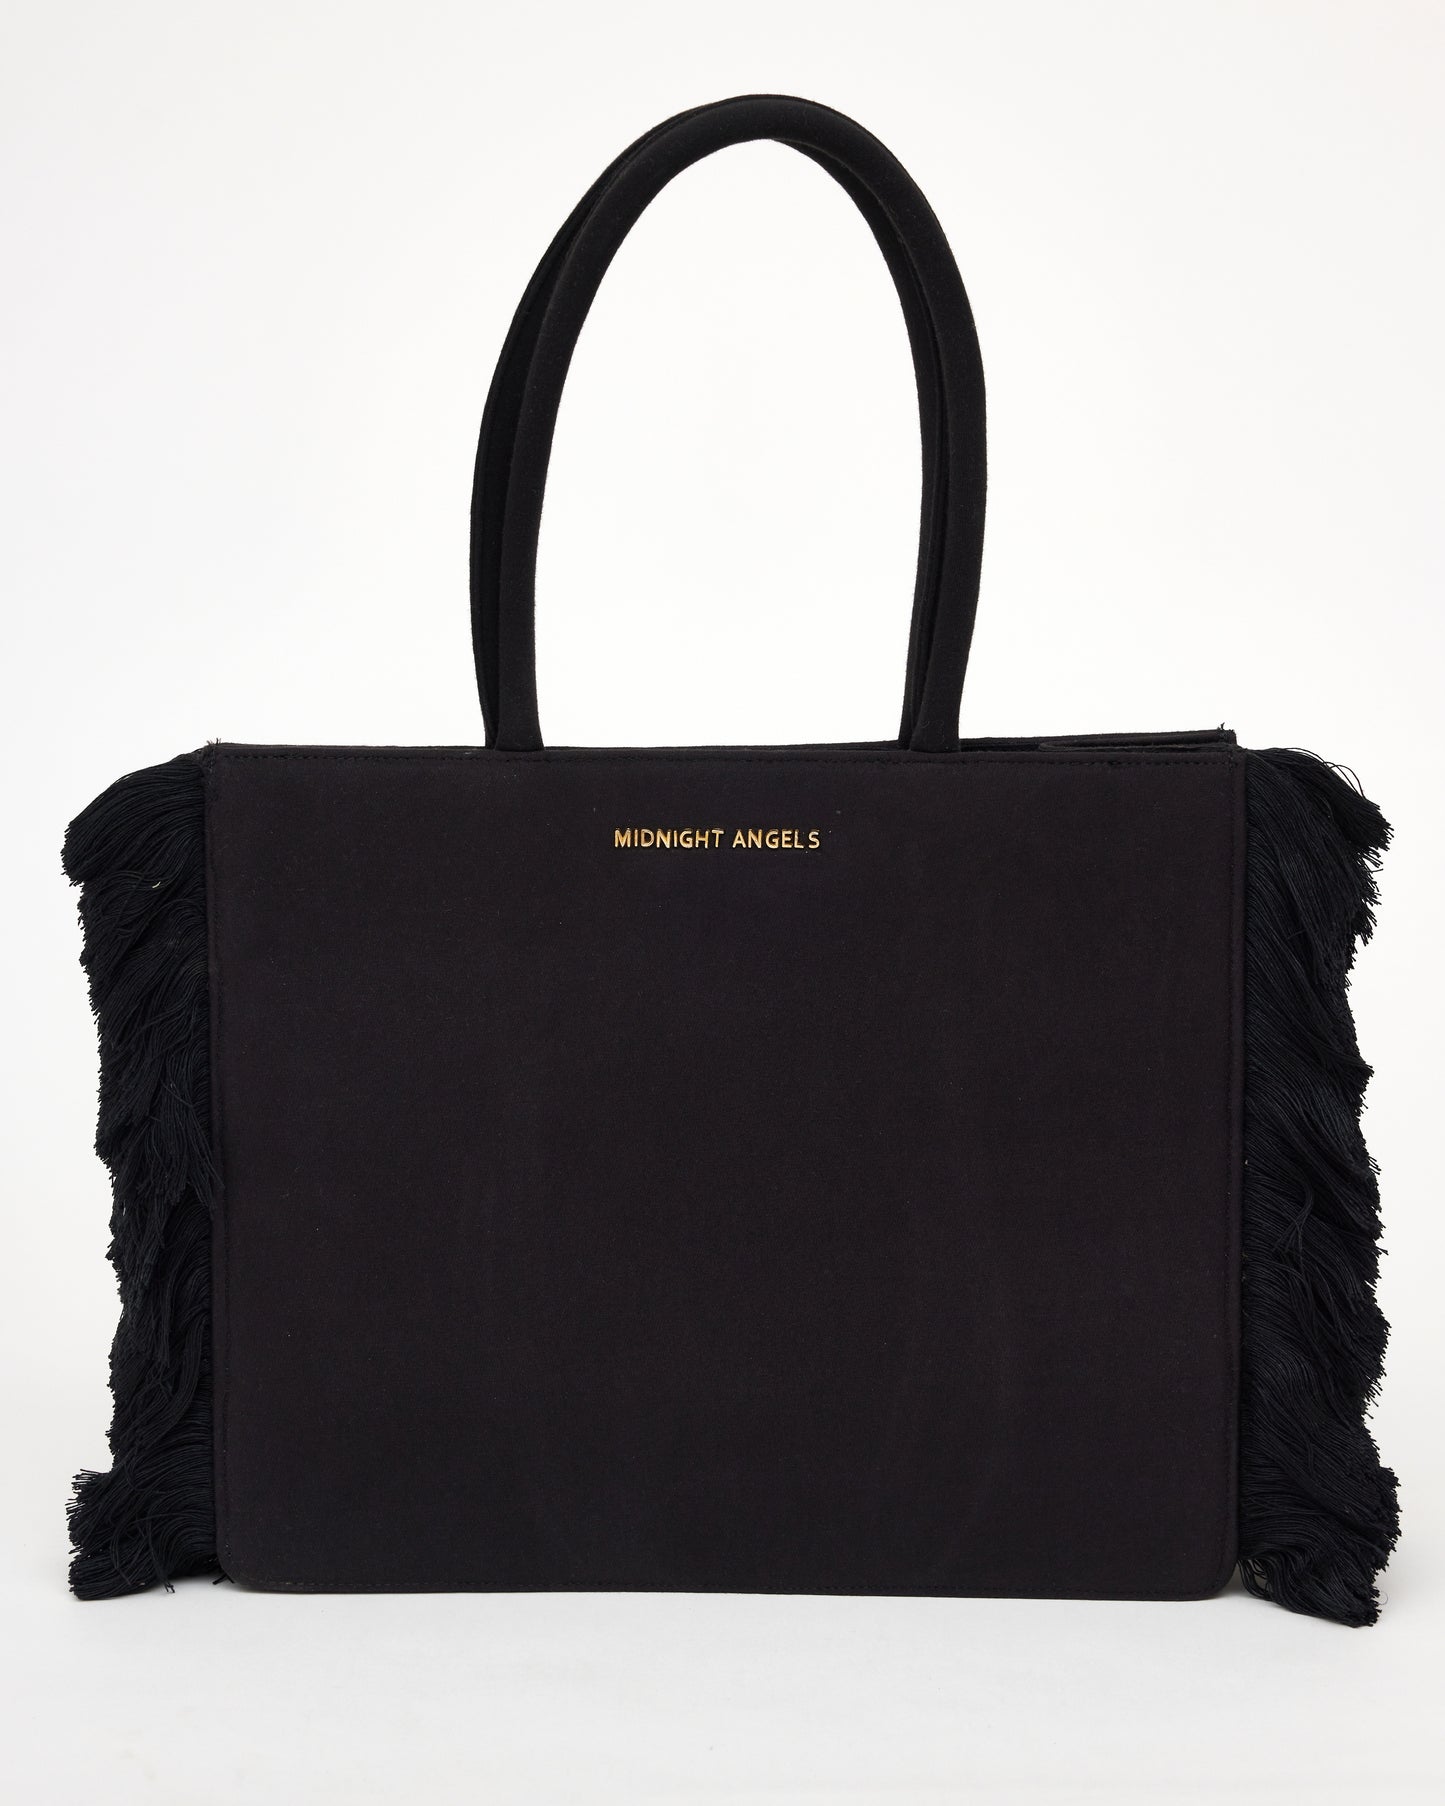 The Sparkling Lioness Tote Bag (Black)